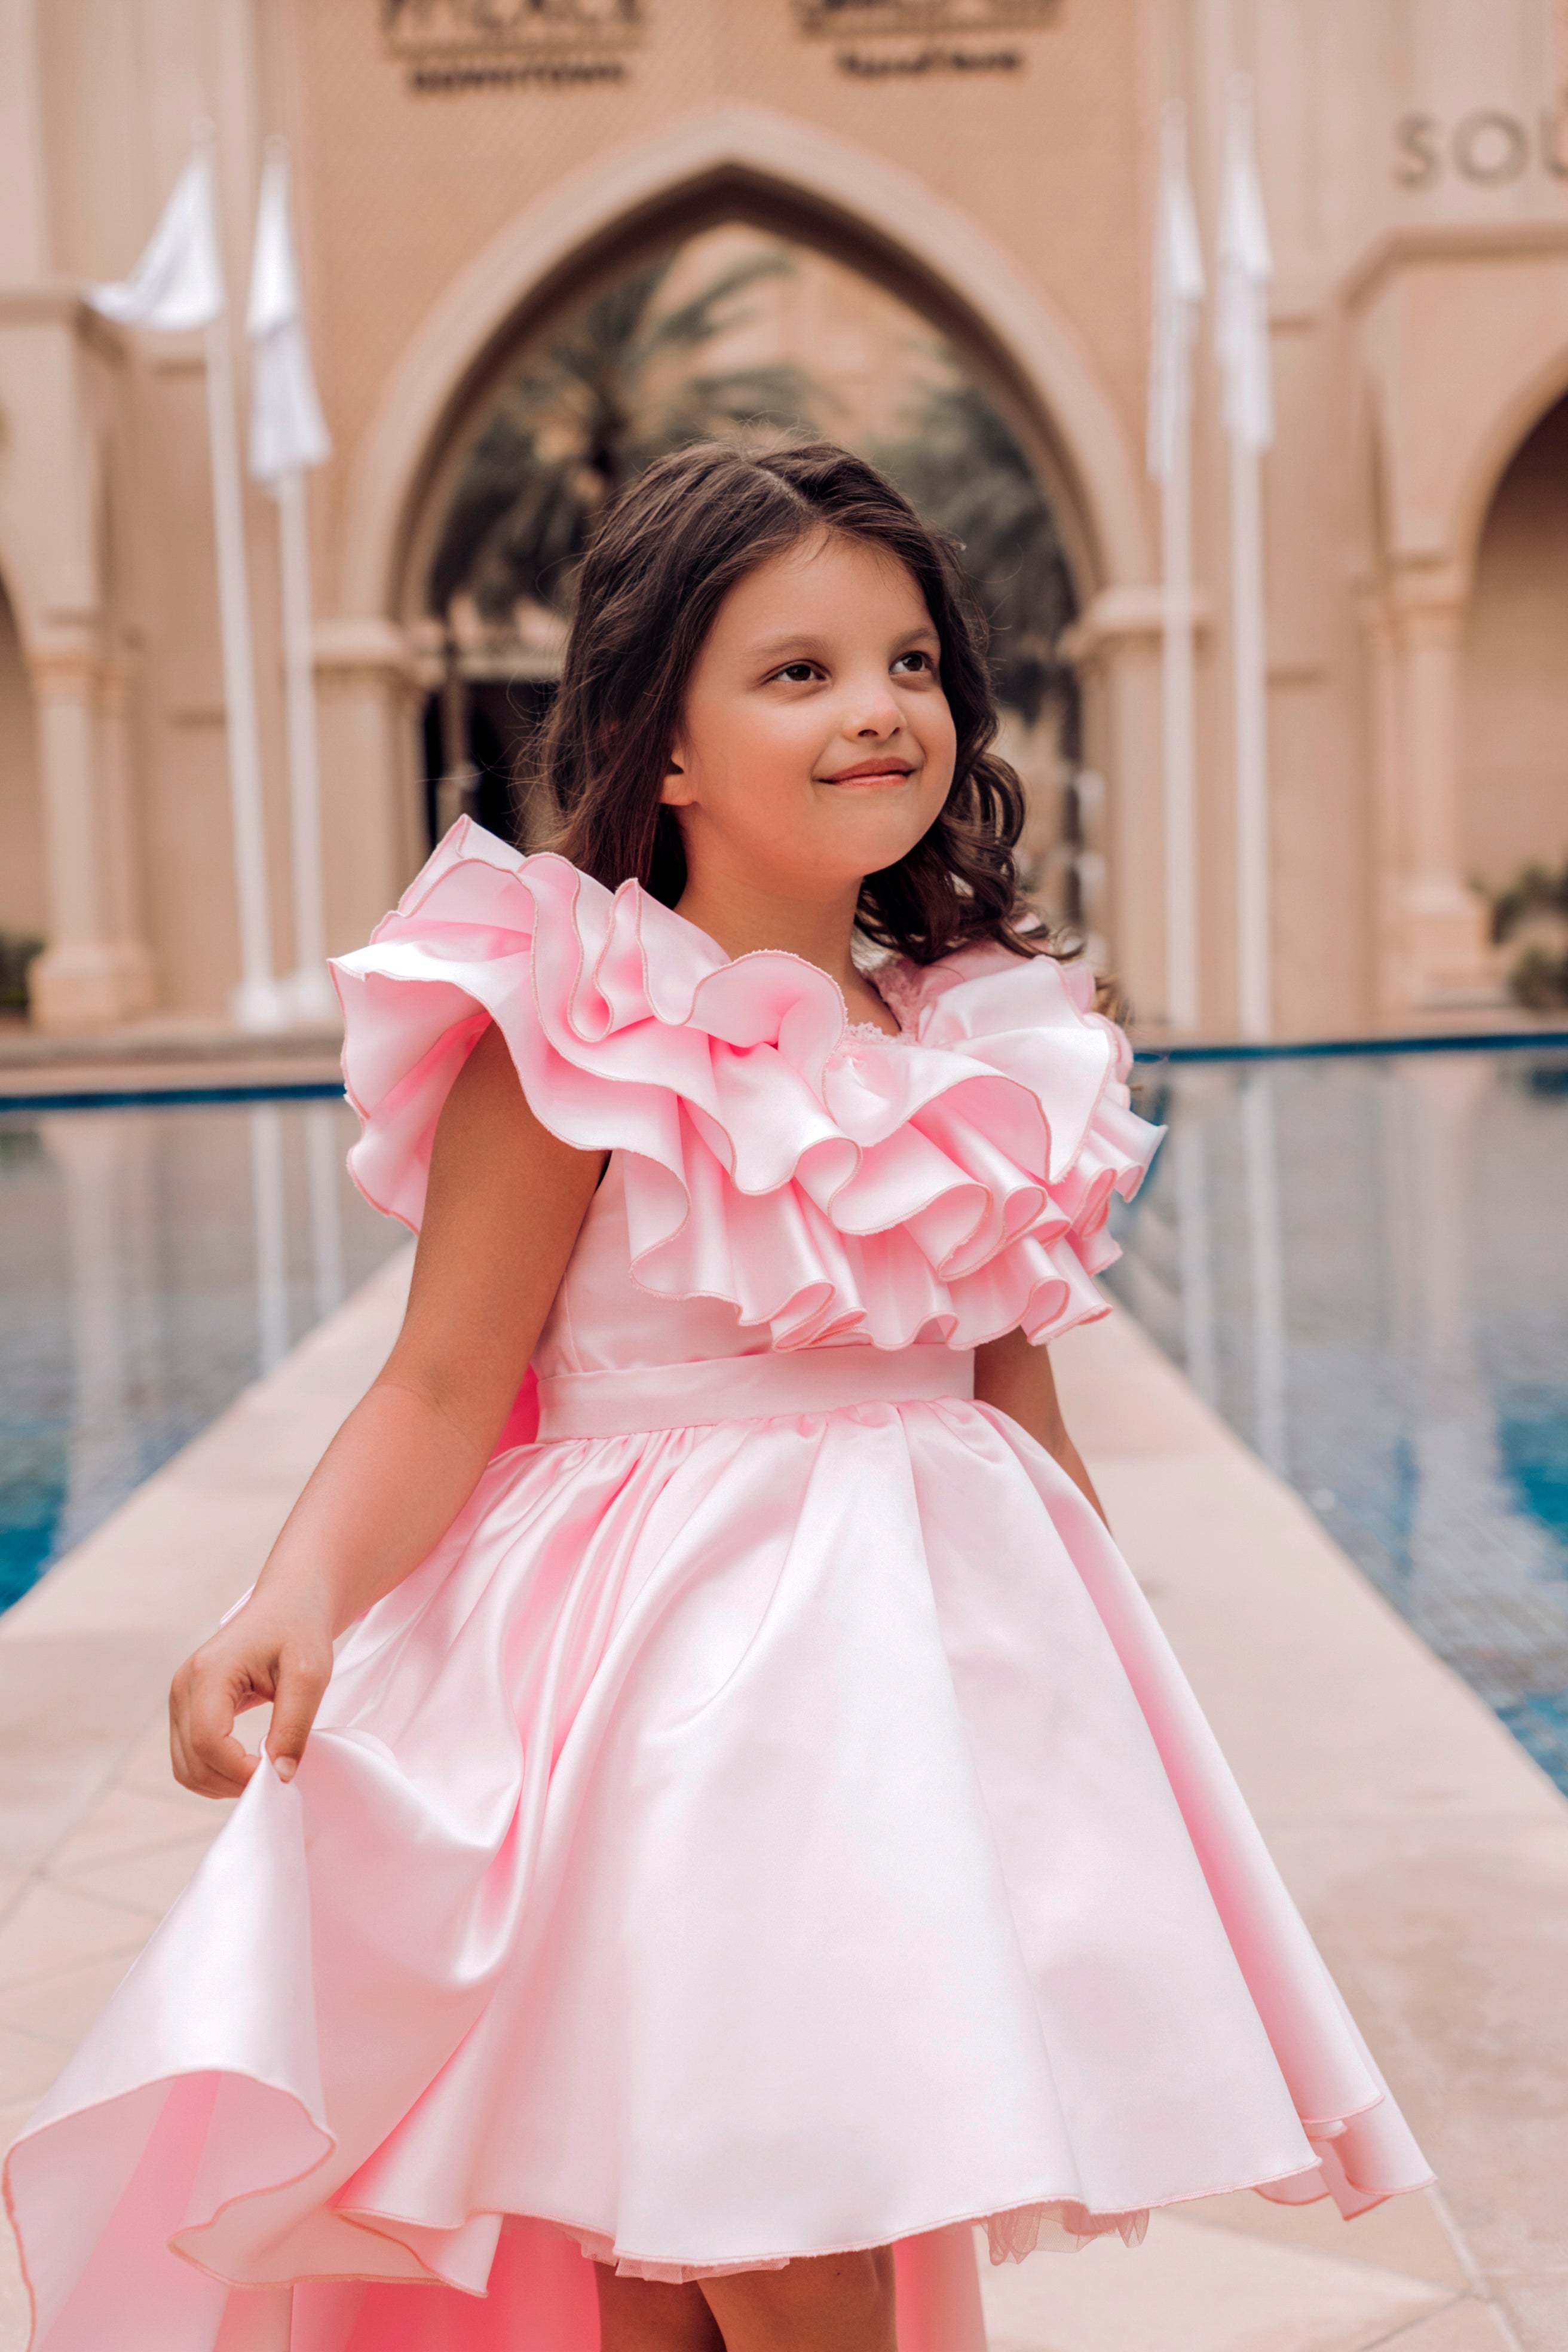 Rochie eleganta roz cu trena pentru fete - Raisa